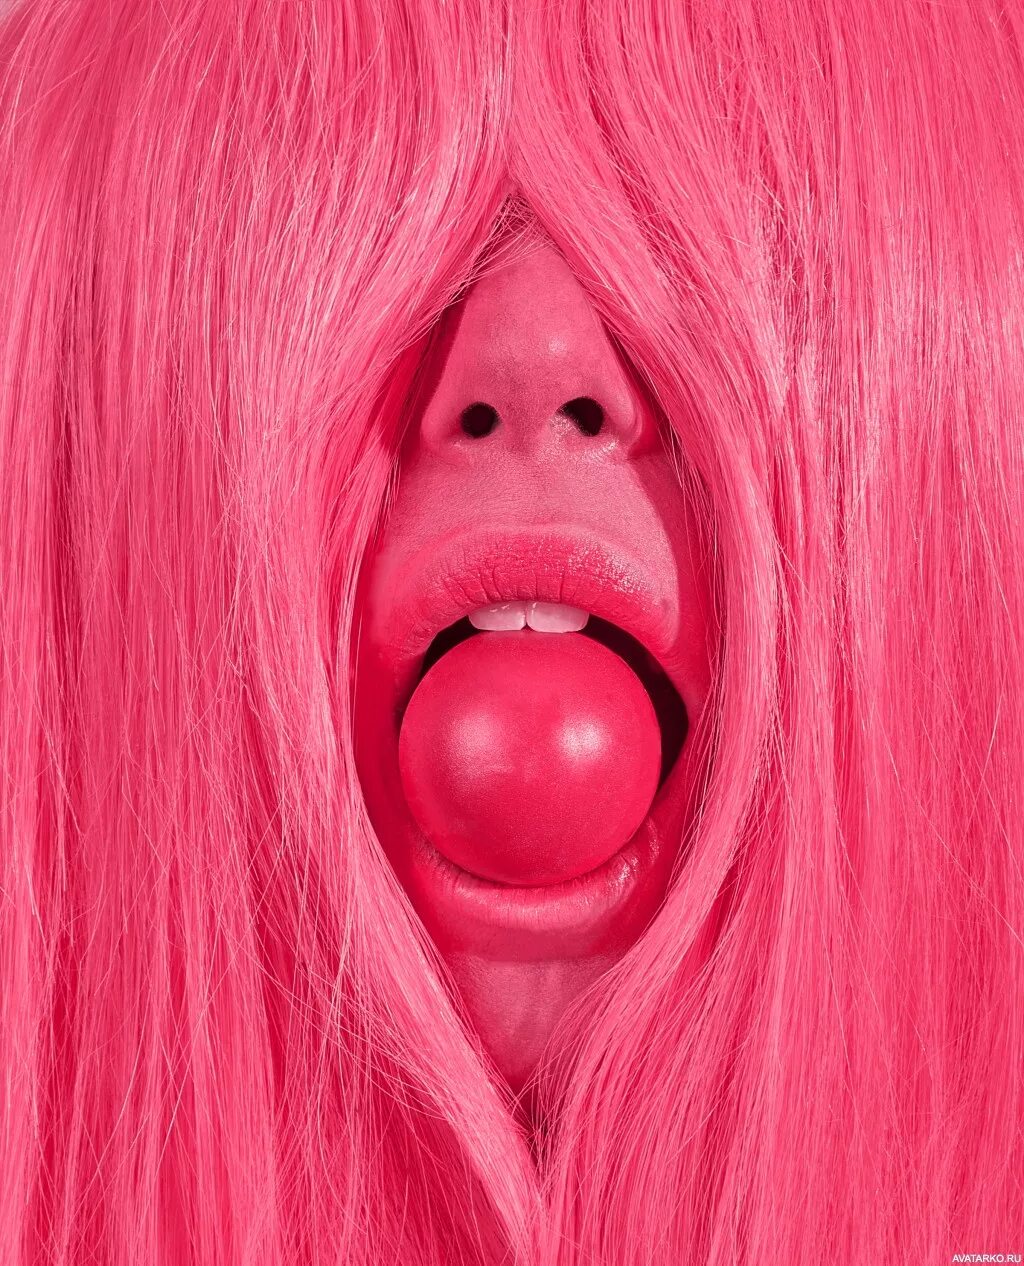 Розовая слюна. Кляп розовый шарик. Девушка с шар ком во рту.